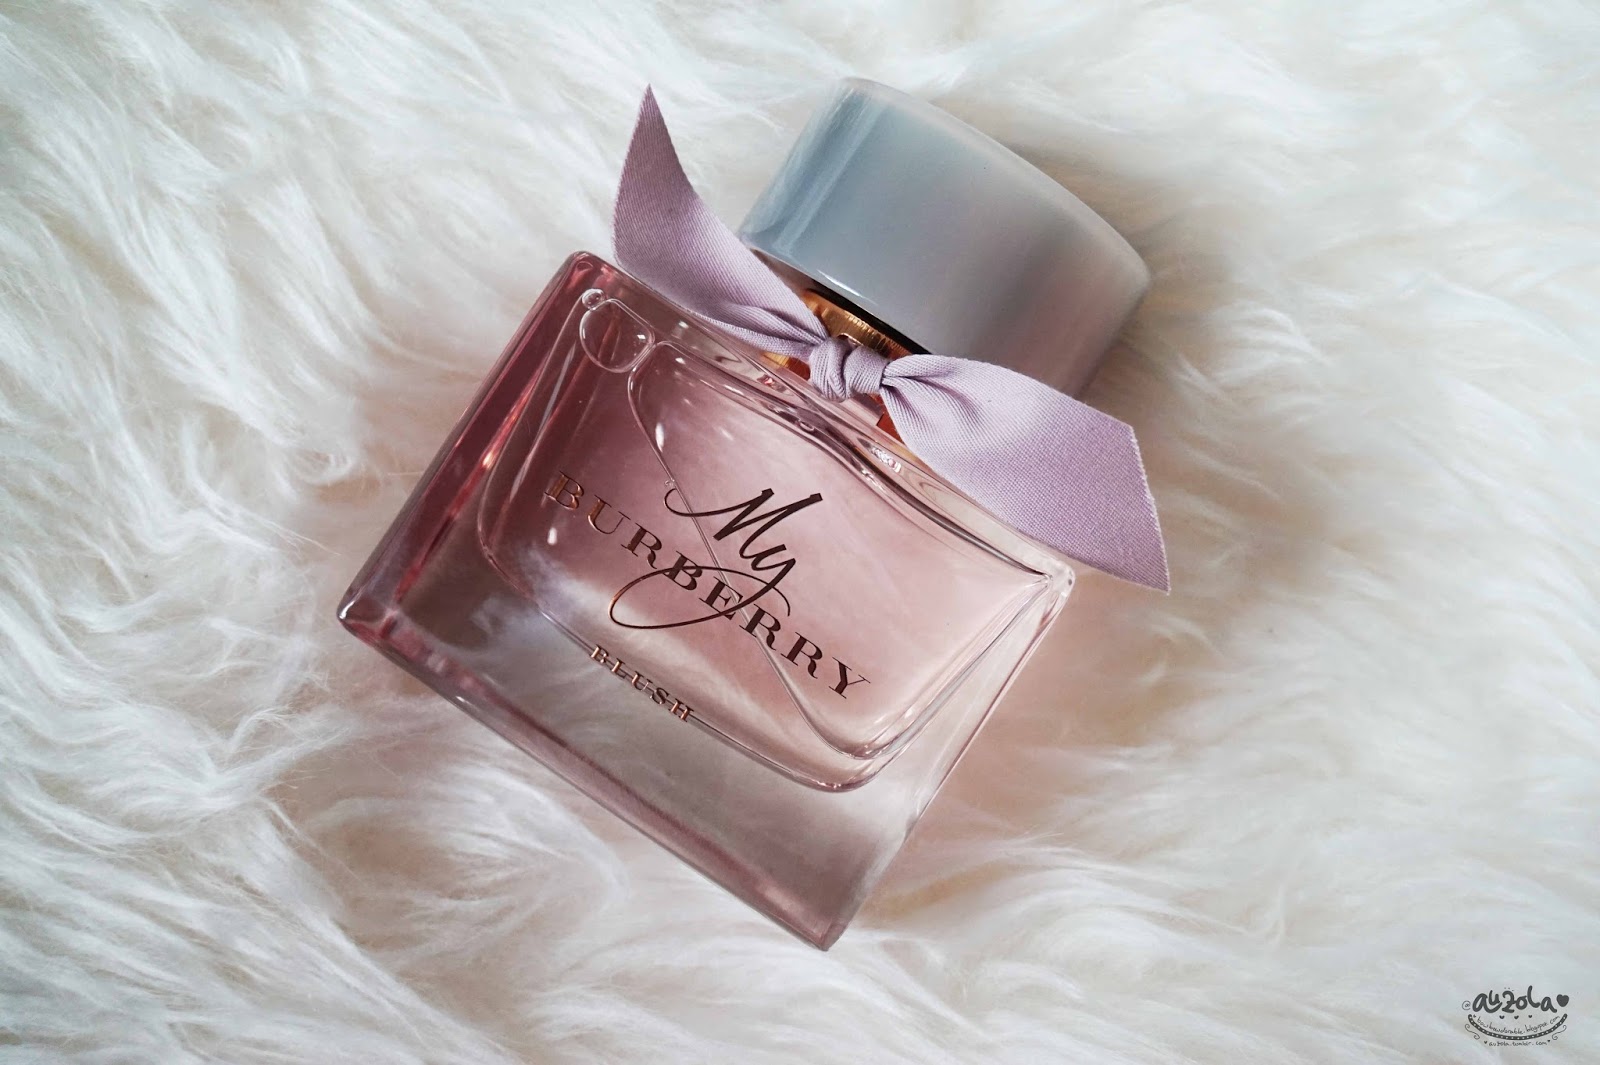 burberry blush perfume review